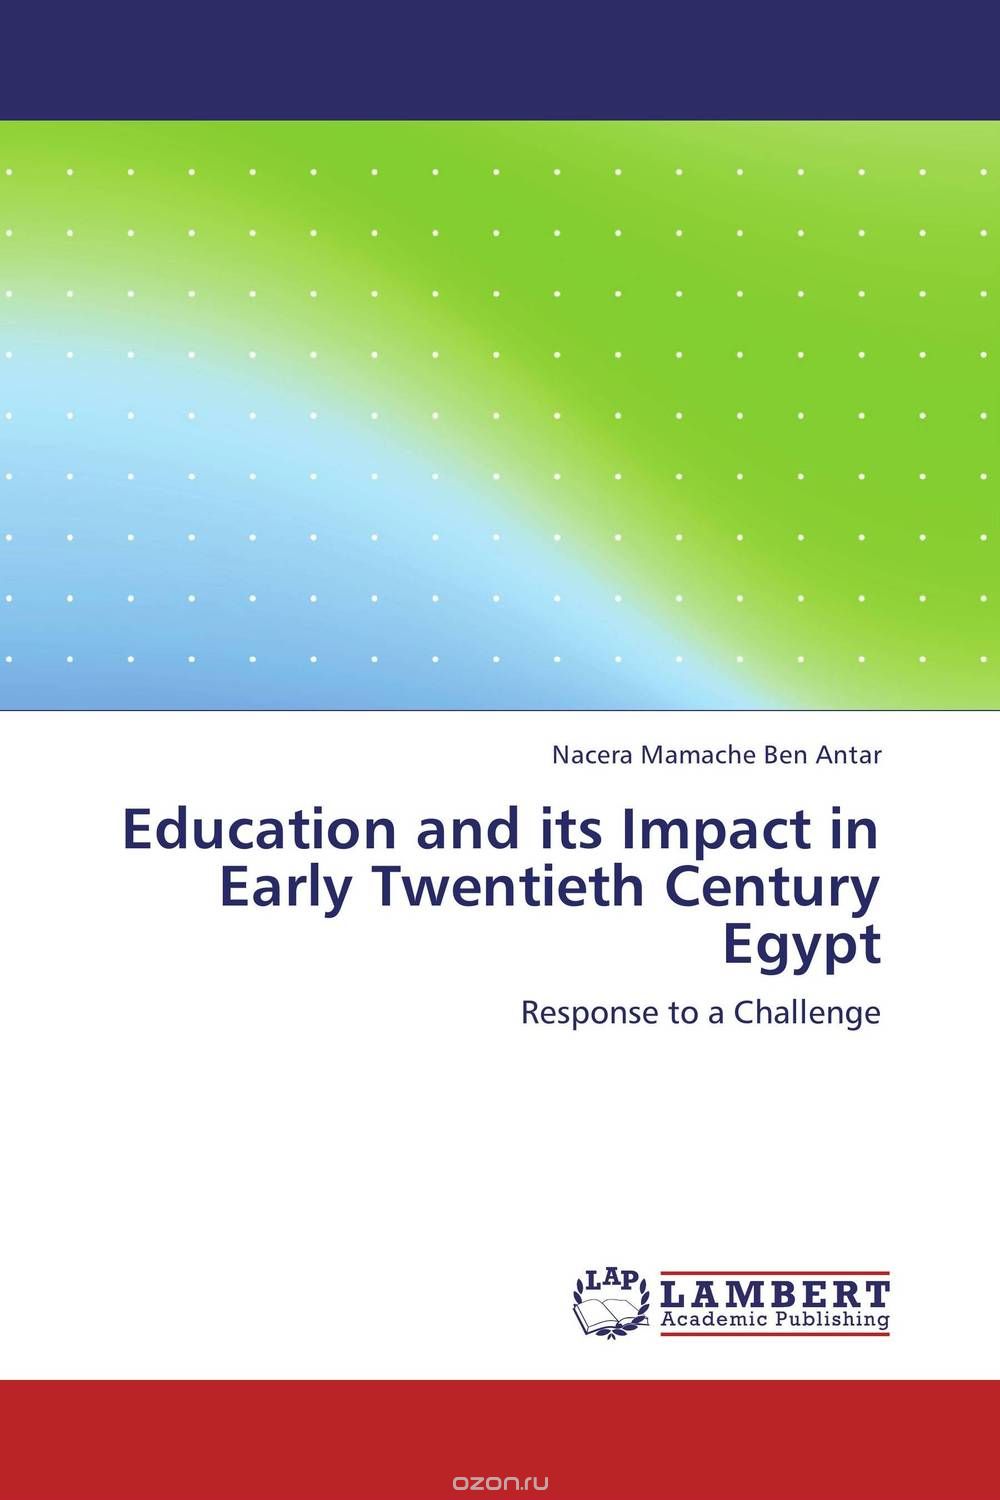 Скачать книгу "Education and its Impact in Early Twentieth Century Egypt"